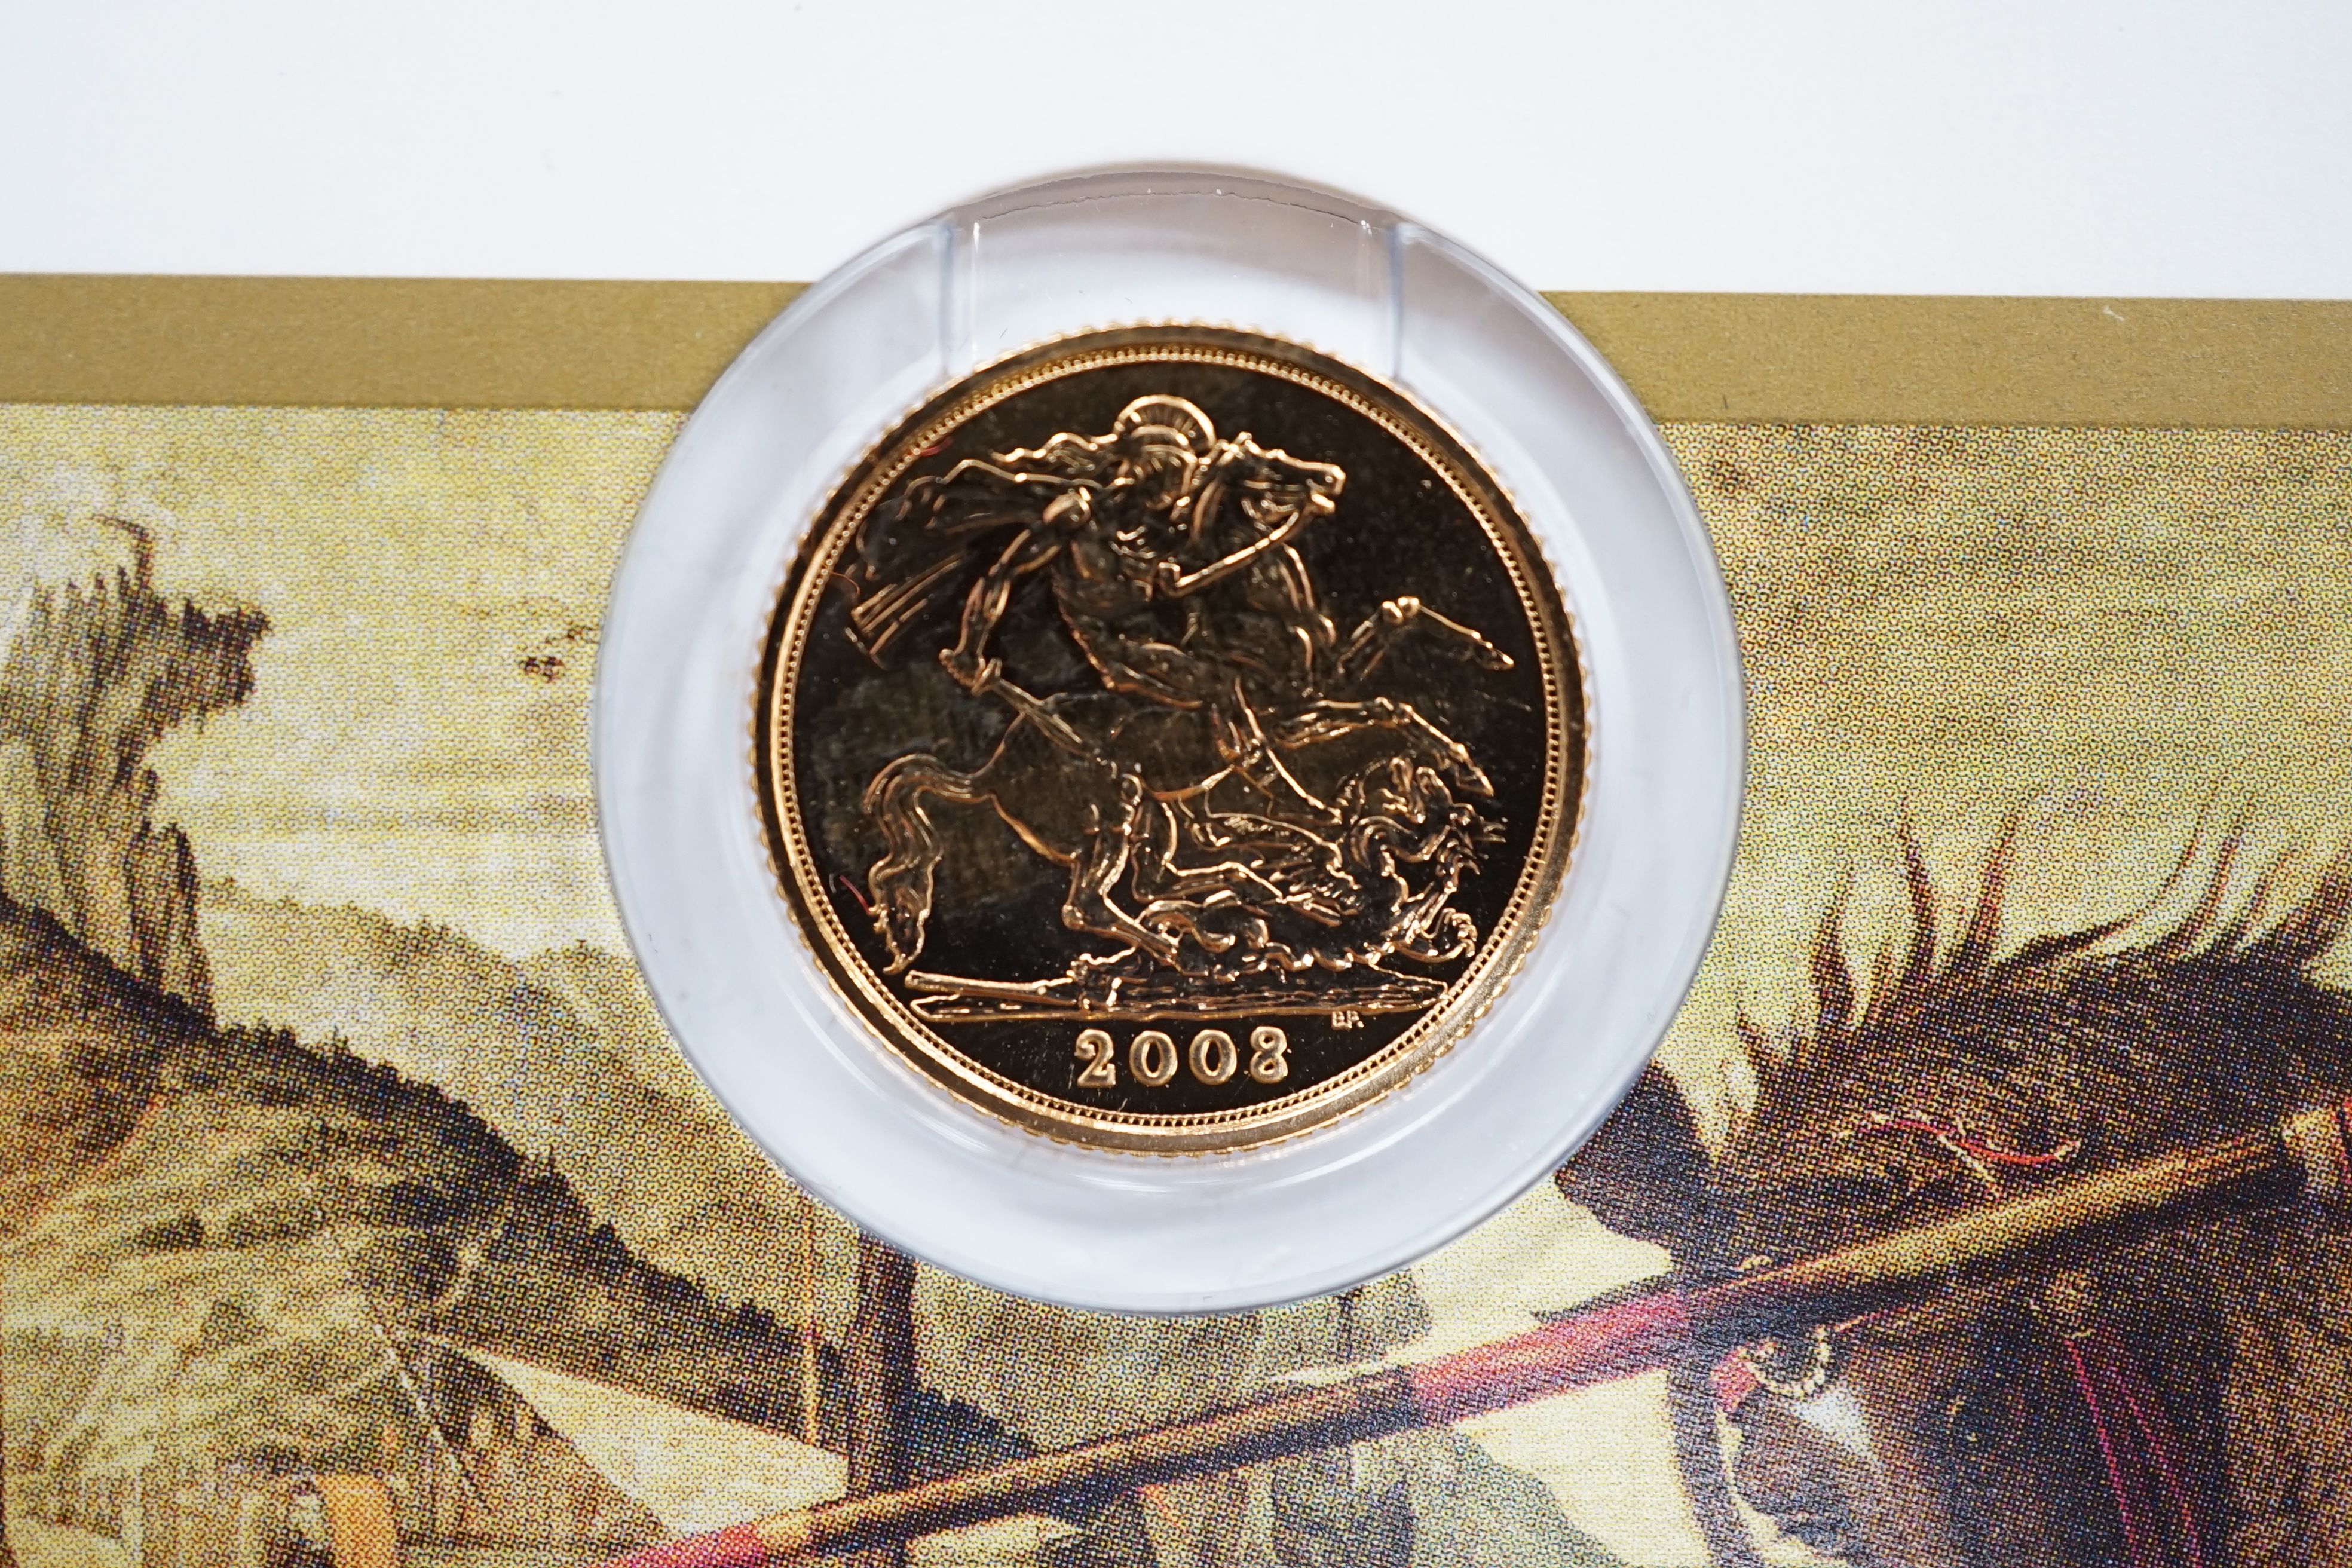 British gold coins, Elizabeth II, 2008 gold bullion half sovereign St. George & The Dragon, BUNC, Royal Mint card